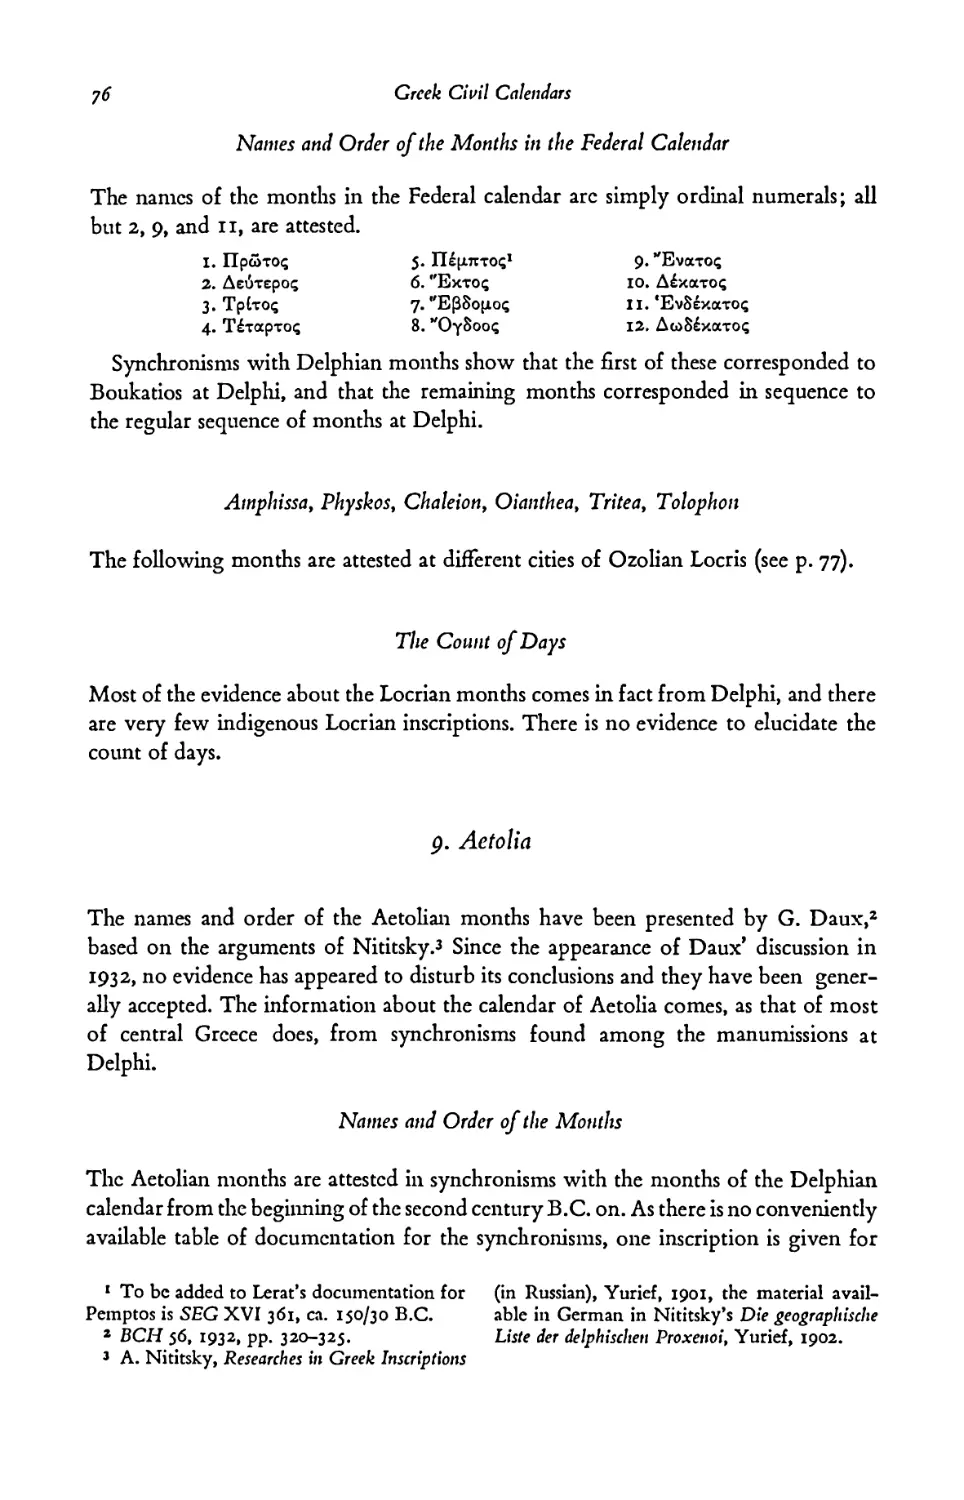 - Amphissa, Physkos, Chaleion, Oianthea, Tritea, Tolophon
- The Count of Days
9. Aetolia